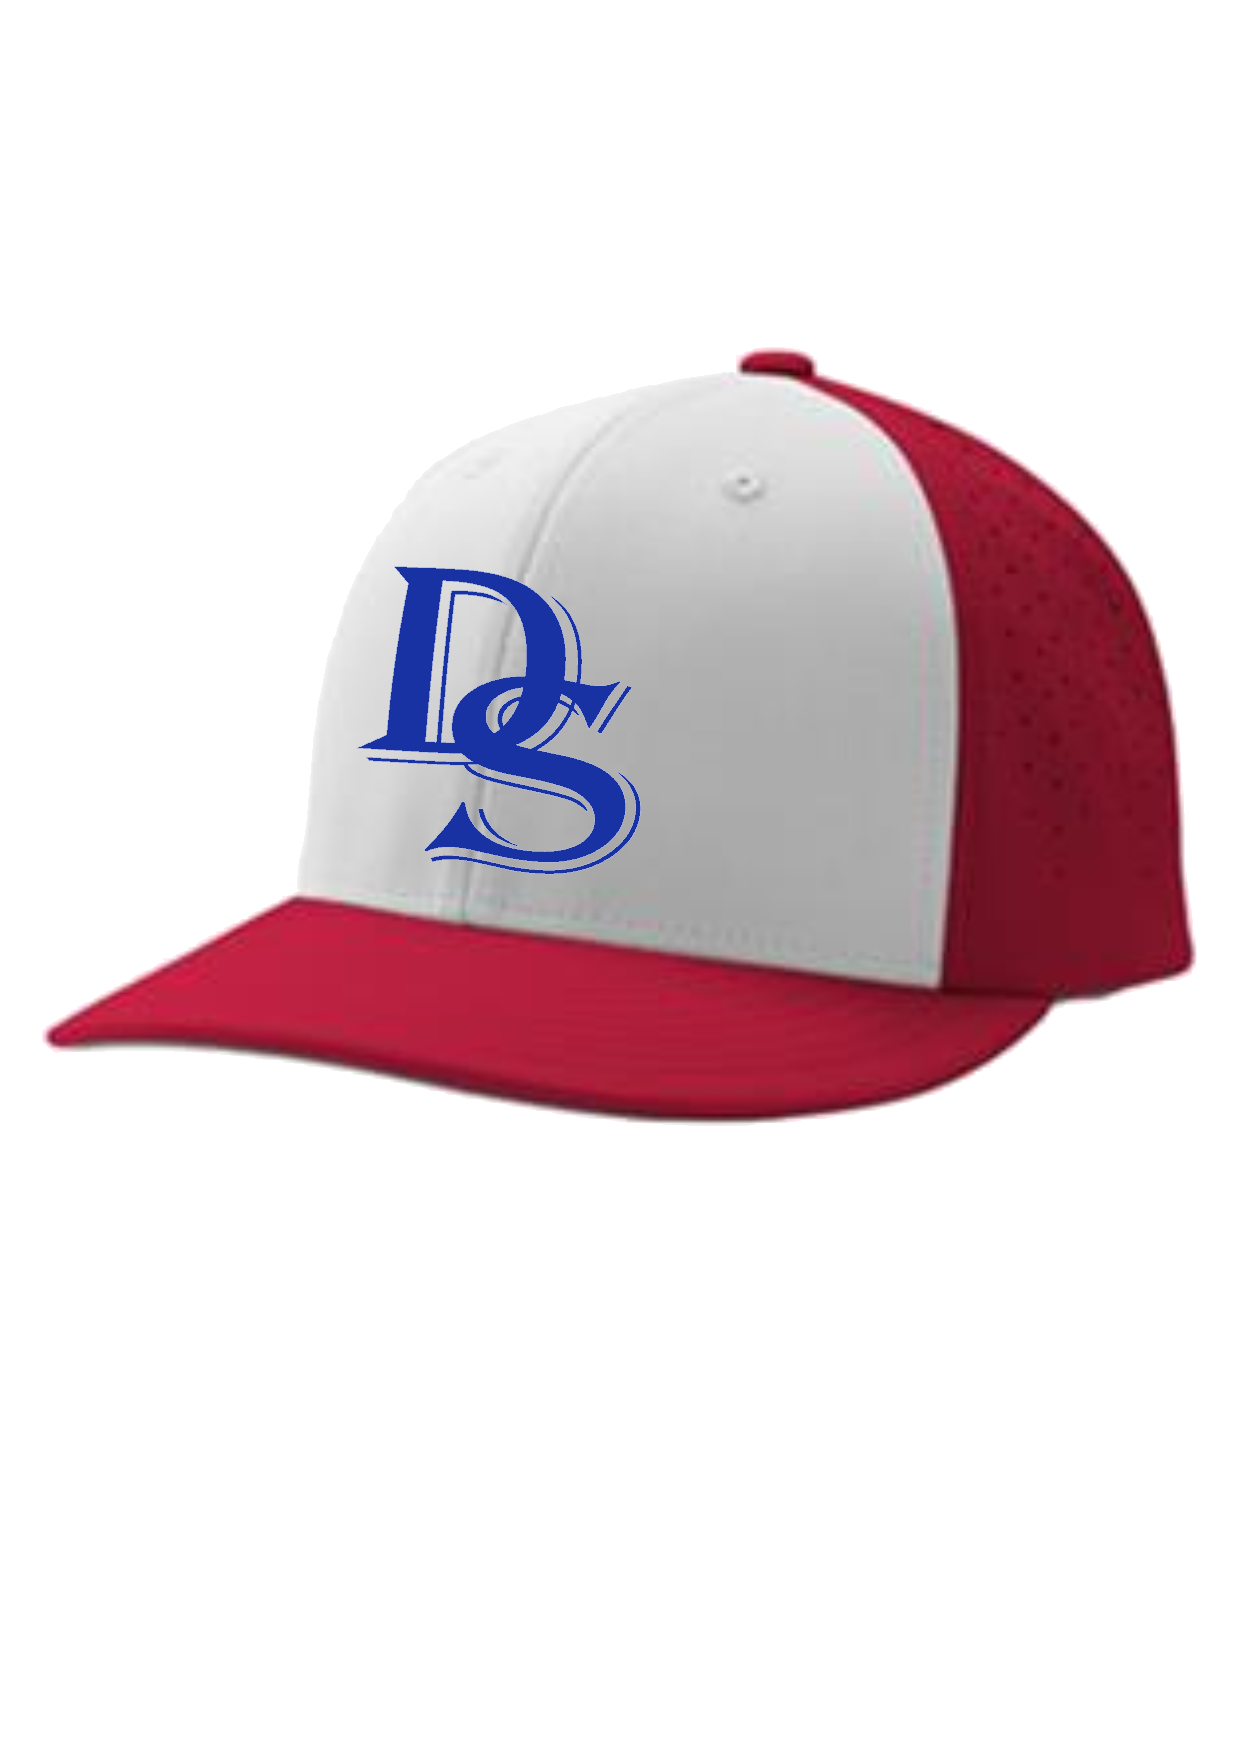 Delaware Spartans Champro Fitted Custom Baseball Cap